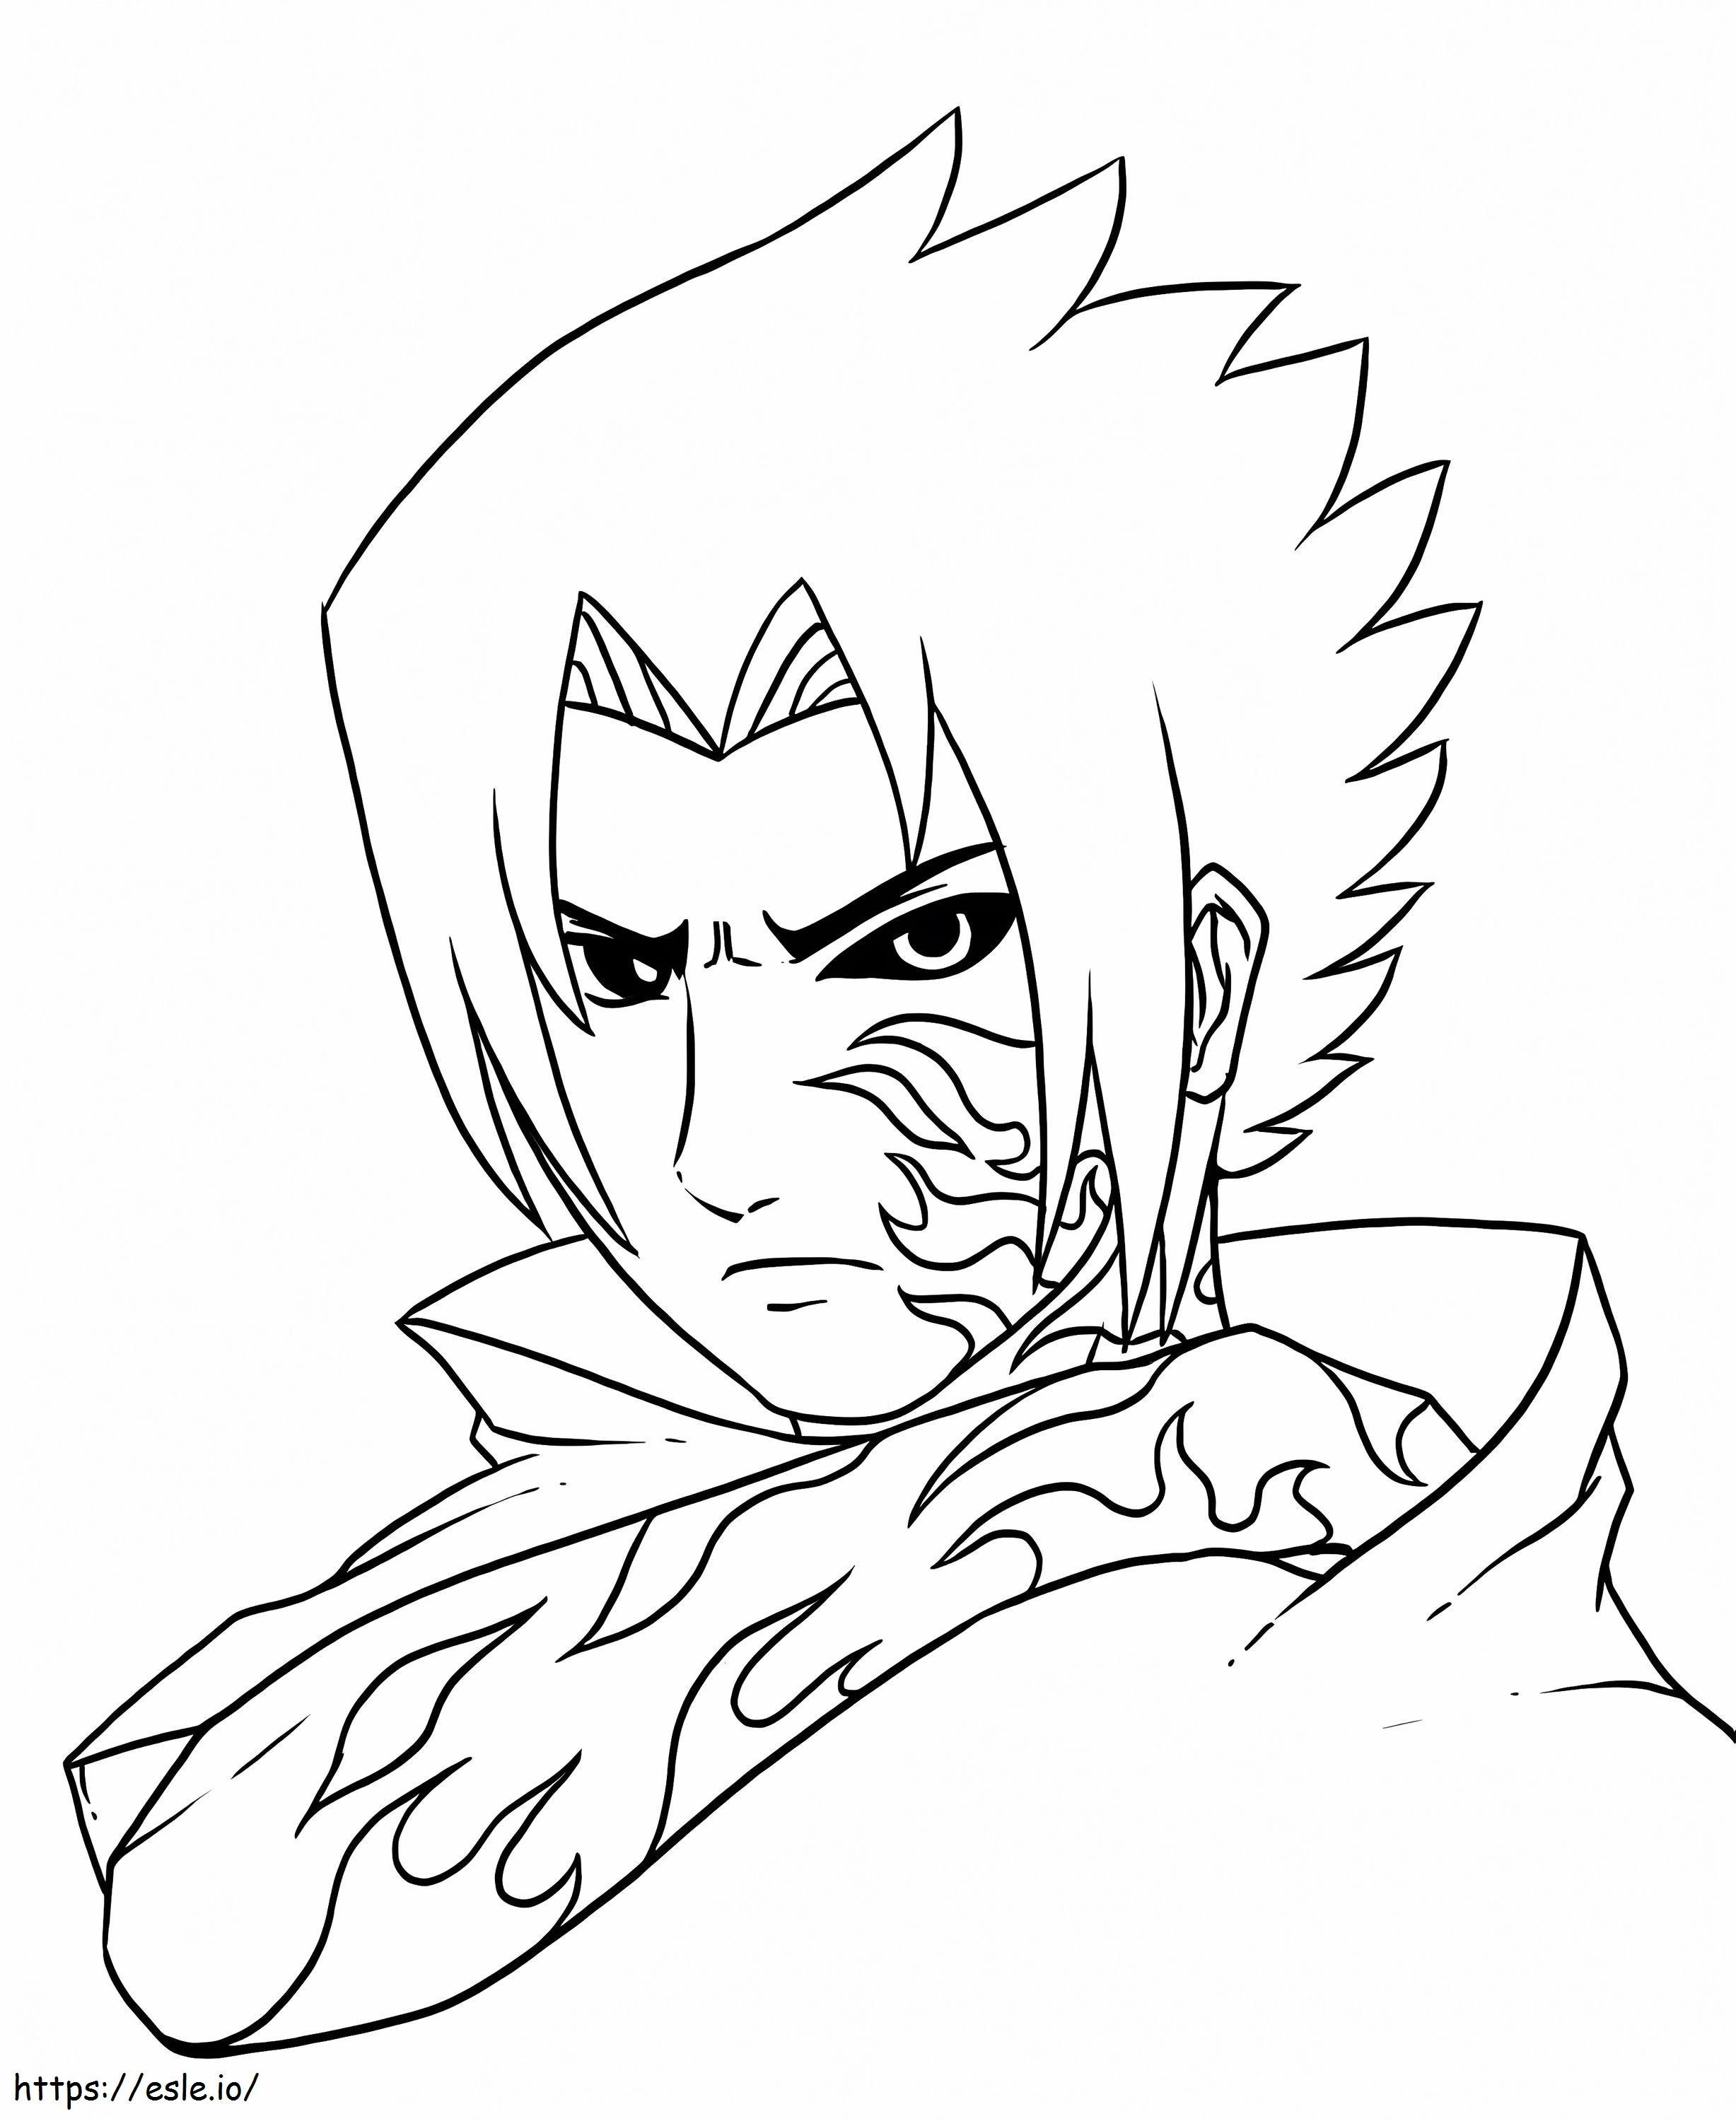 Sasuke 5 coloring page